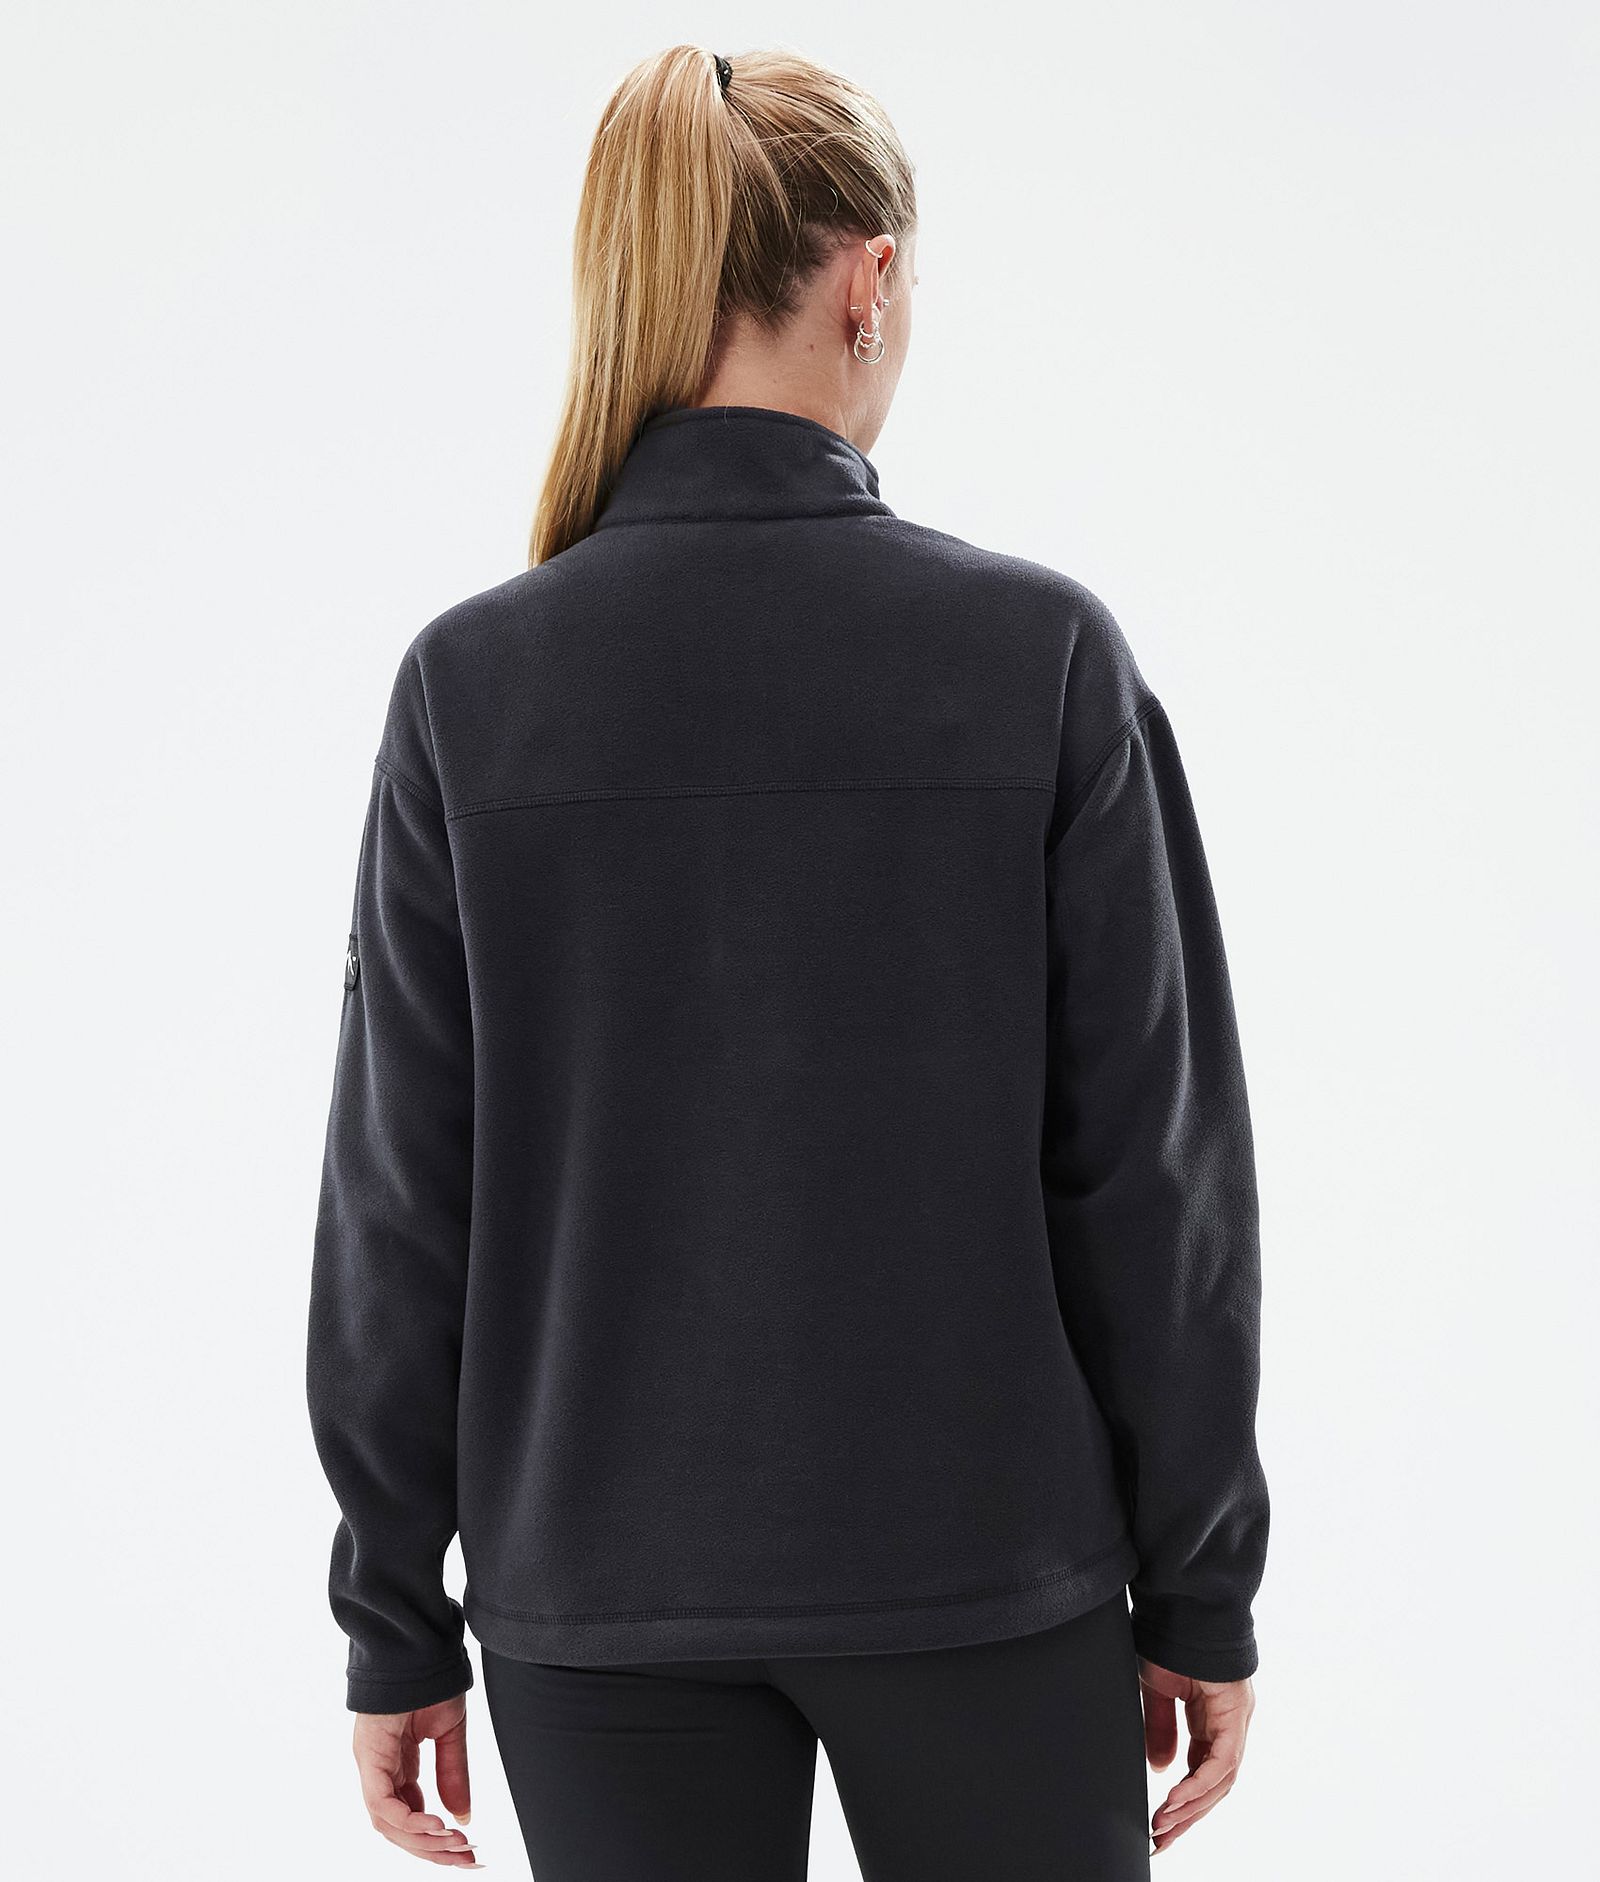 Dope Comfy W Fleece Sweater Women Black Renewed, Image 6 of 6